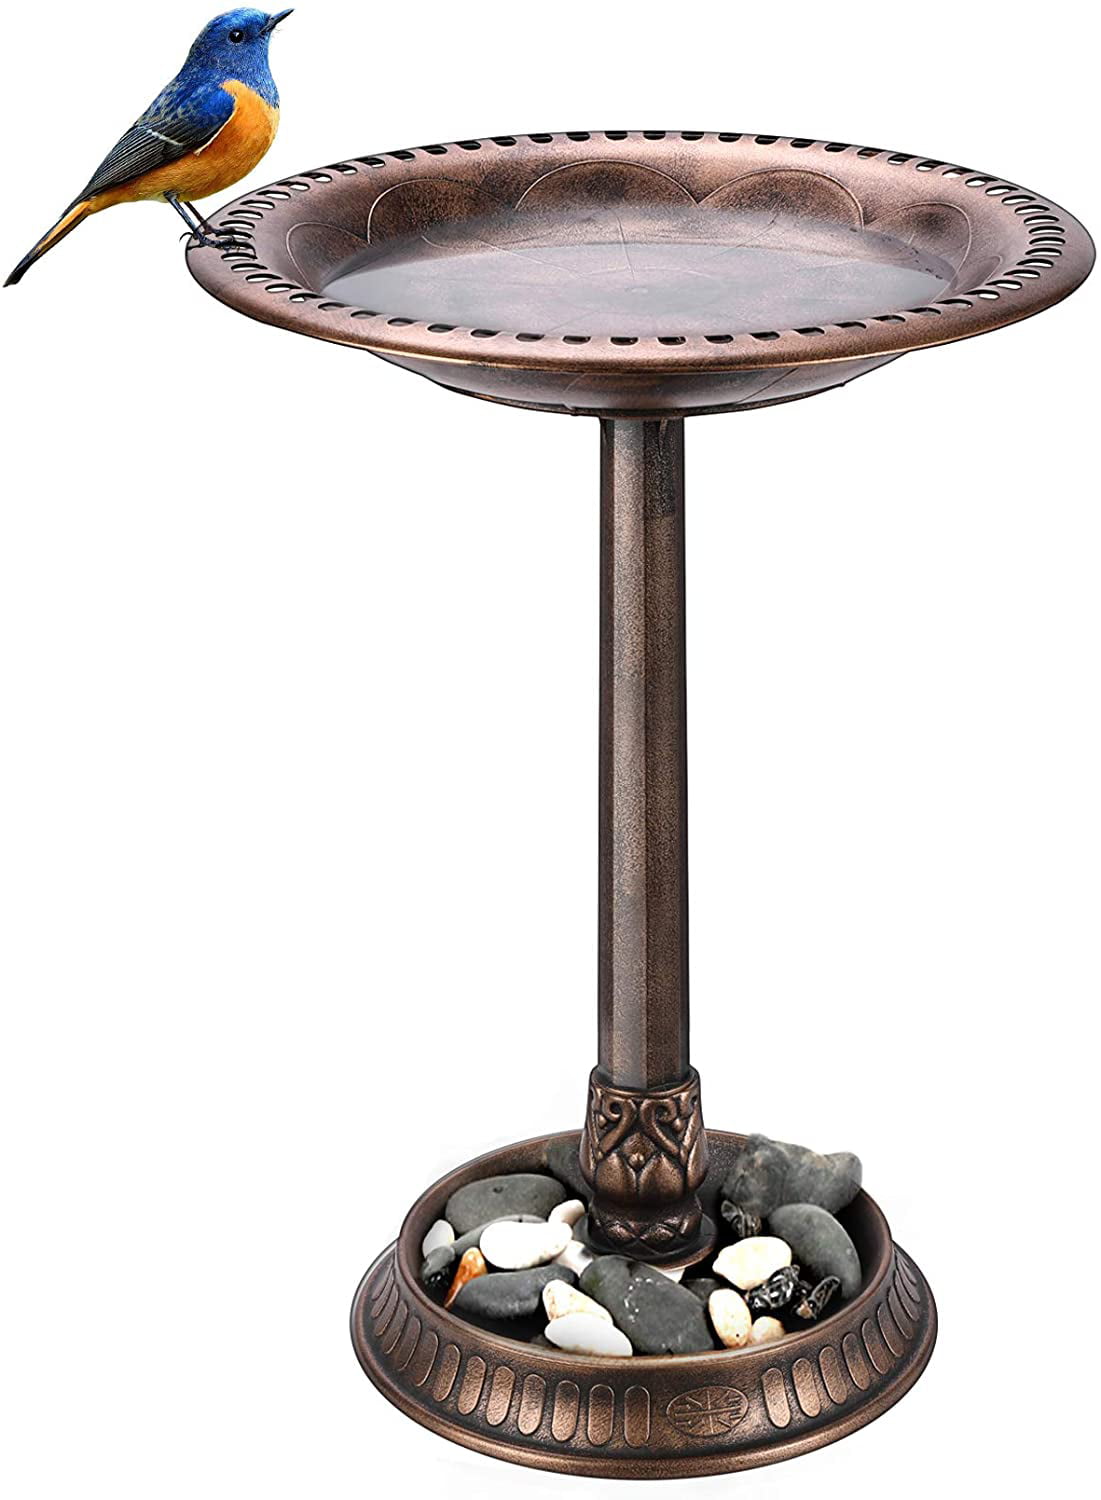 Magic Salt ORNAMENTAL OUTDOOR GARDEN BIRD BATH WITH SHELTERED FEEDING TABLE